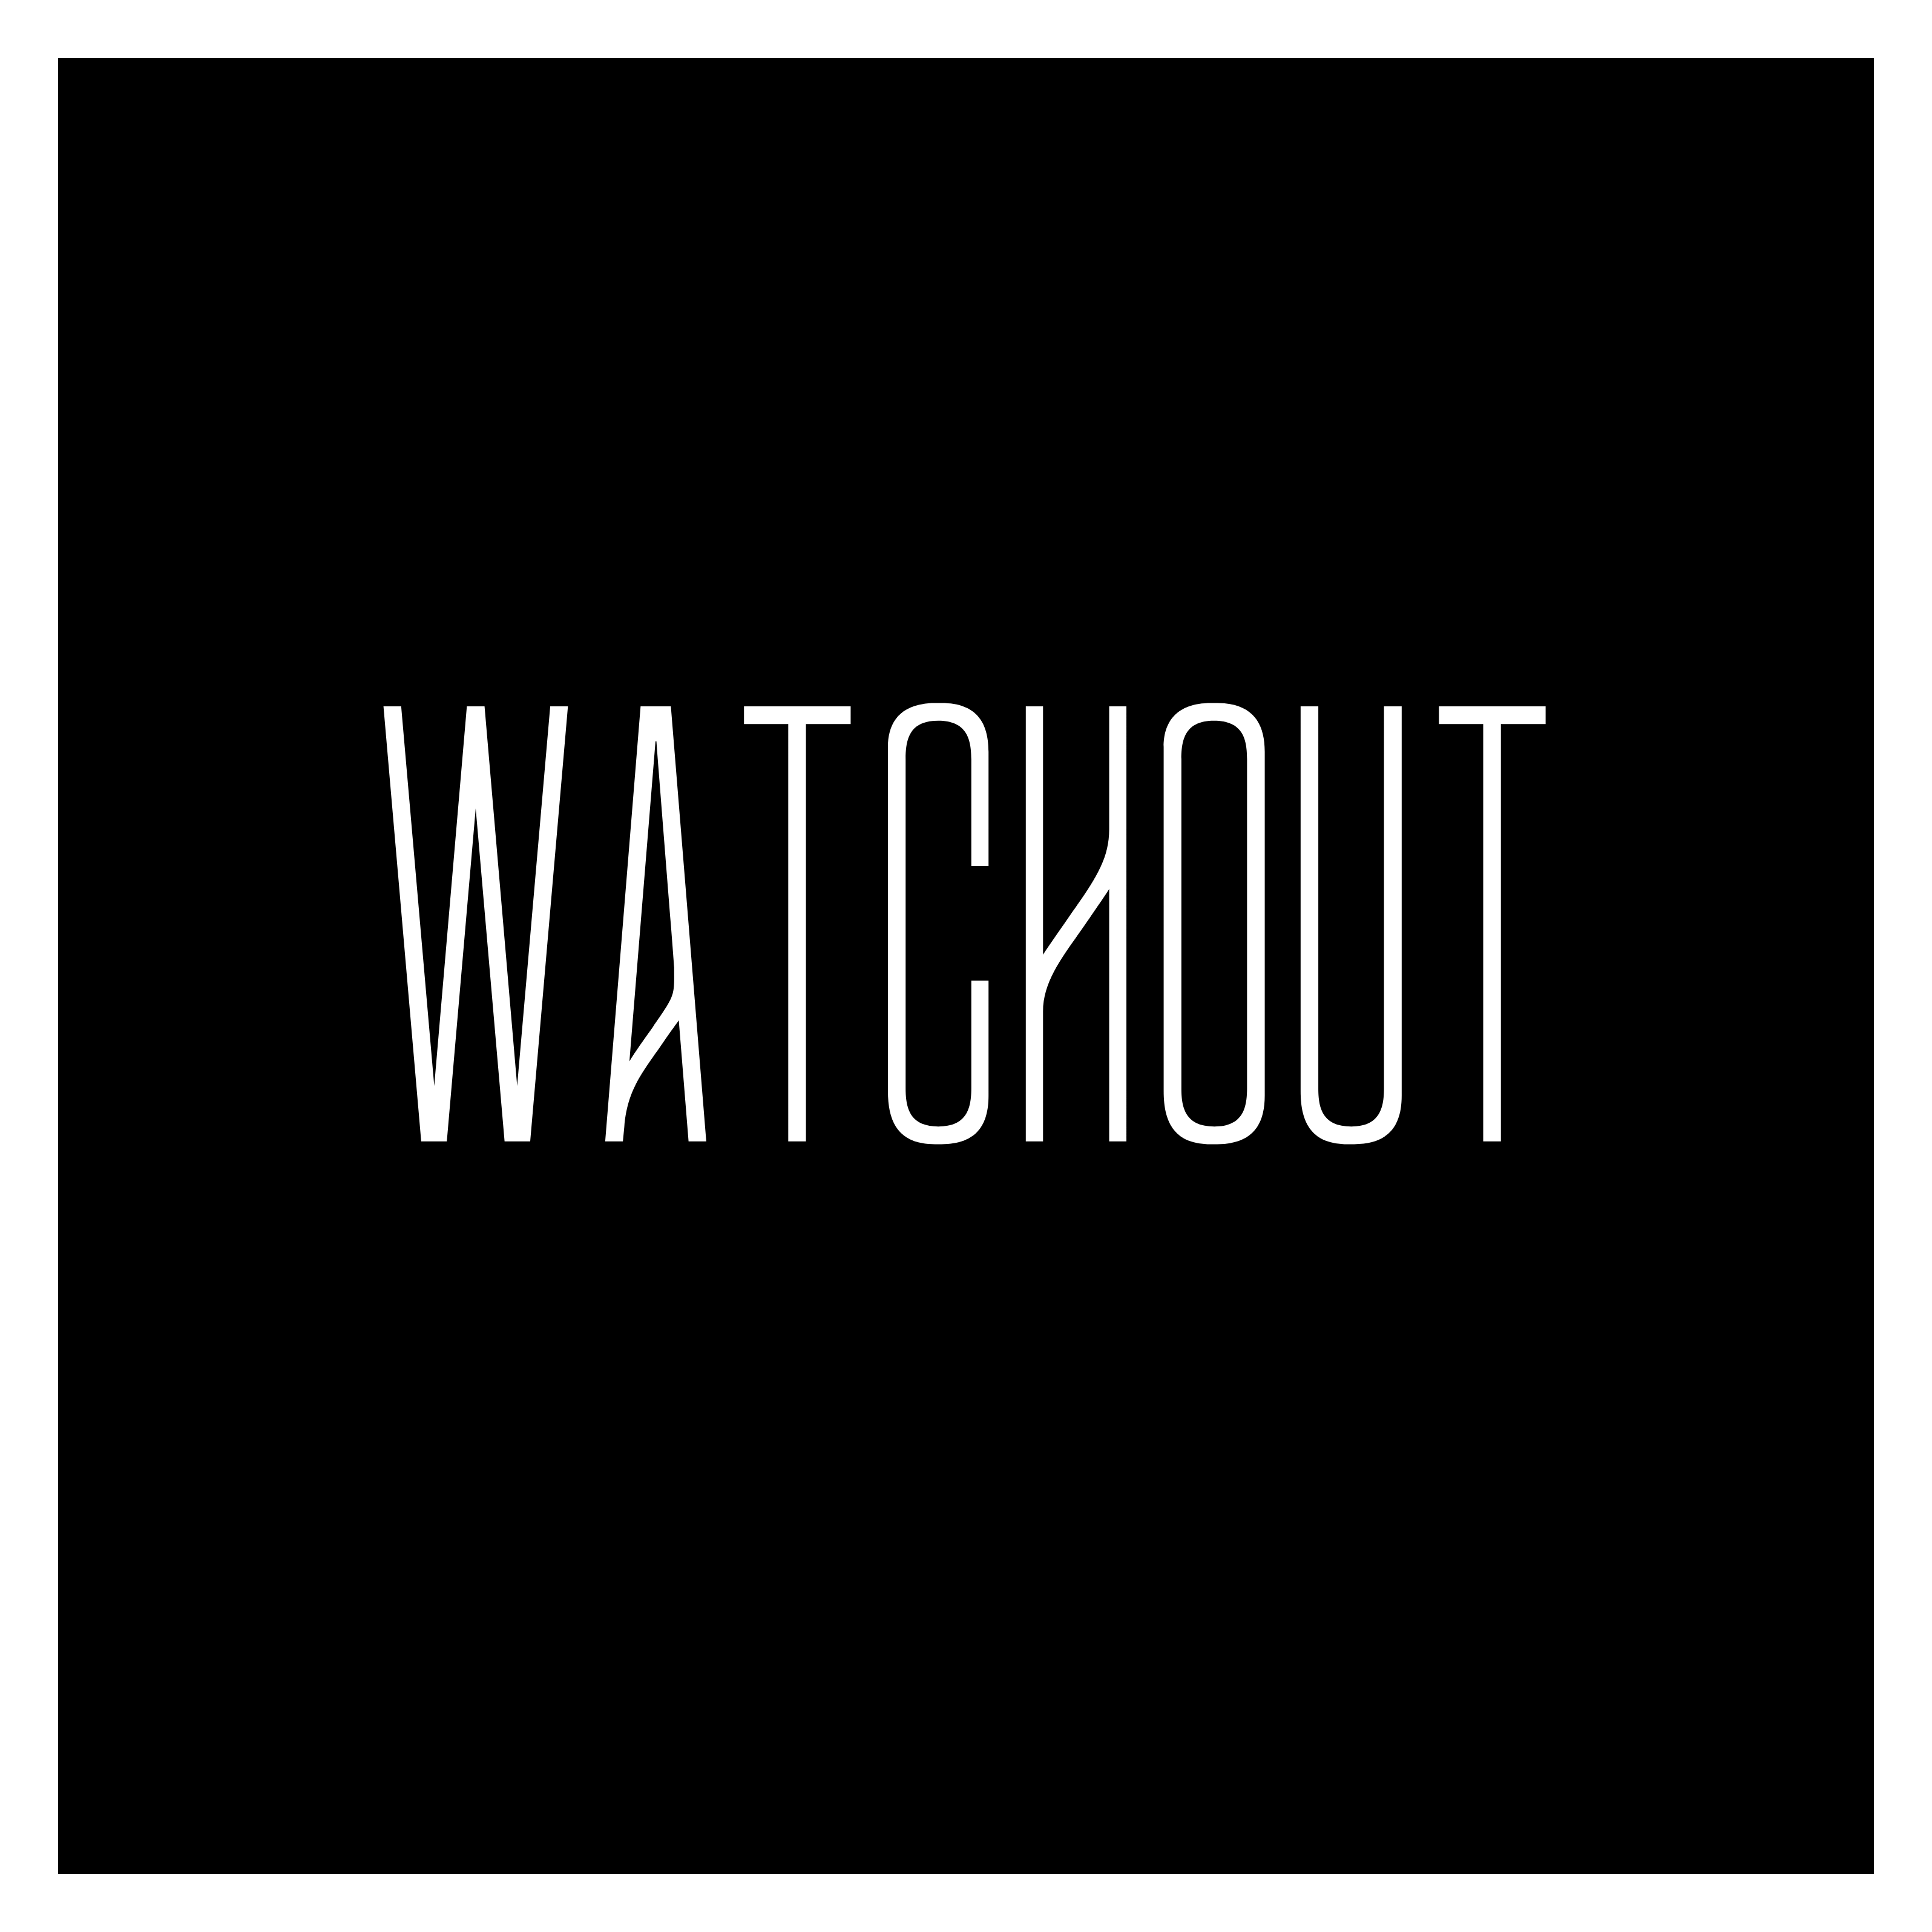 WatchOut Logo